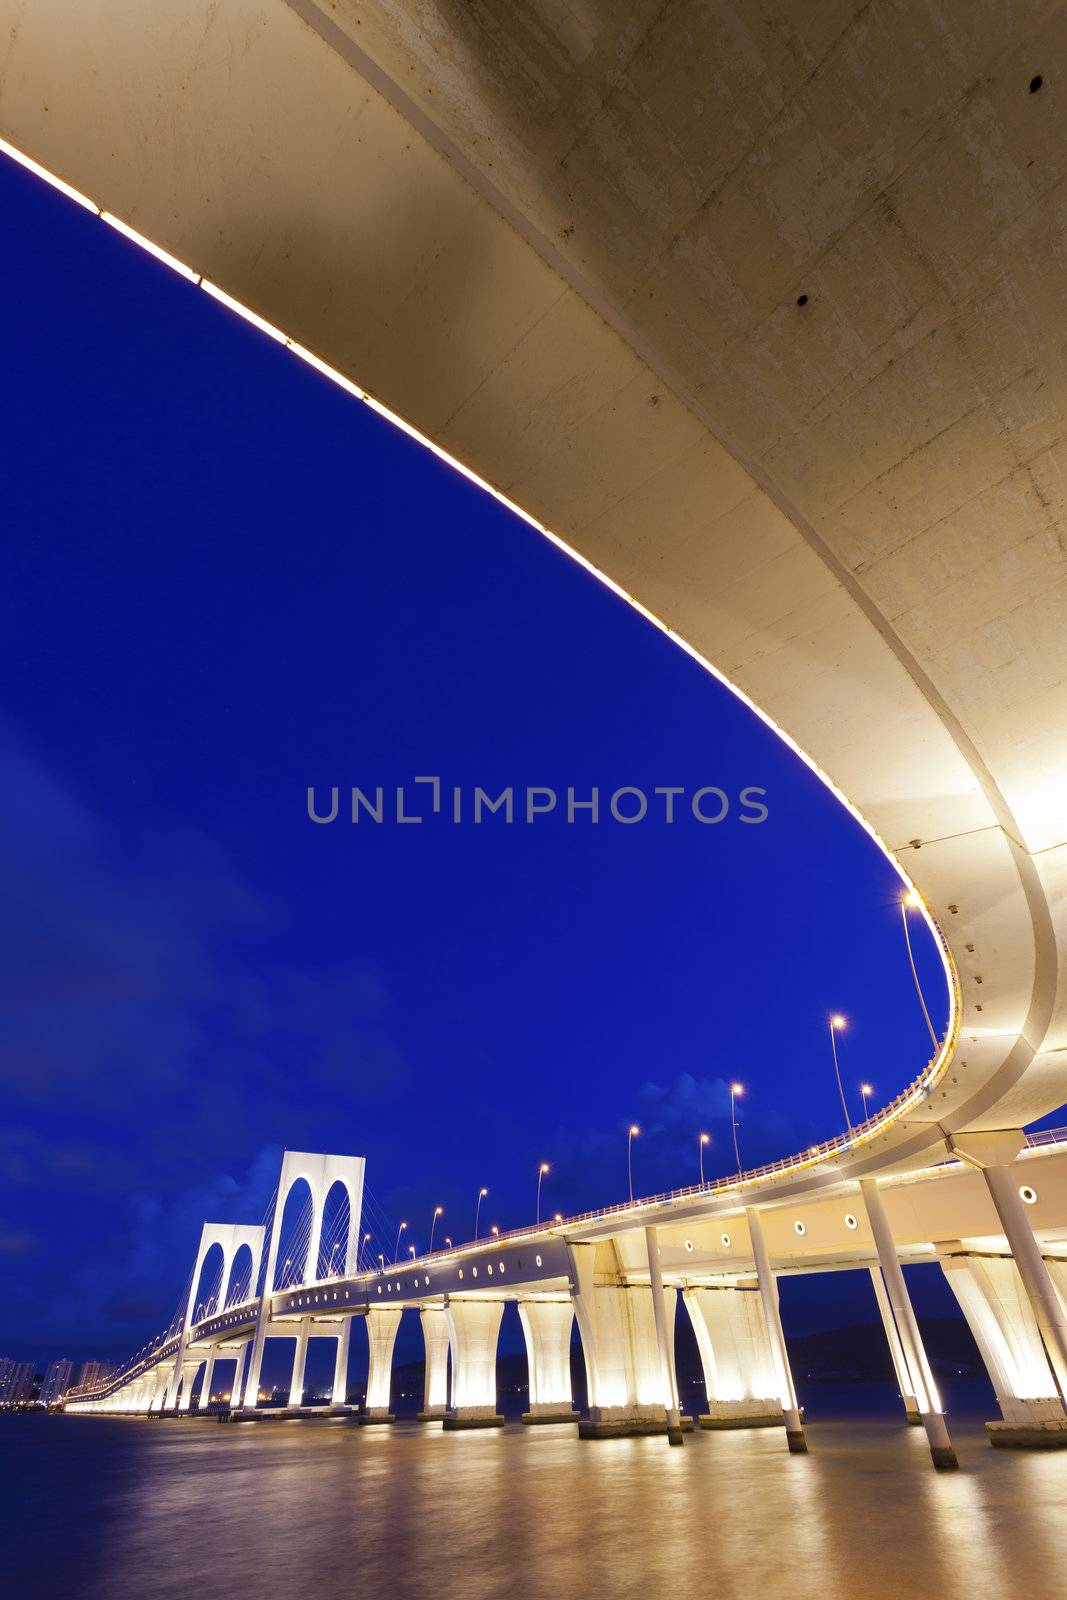 Sai Van Bridge in Macau at night by kawing921